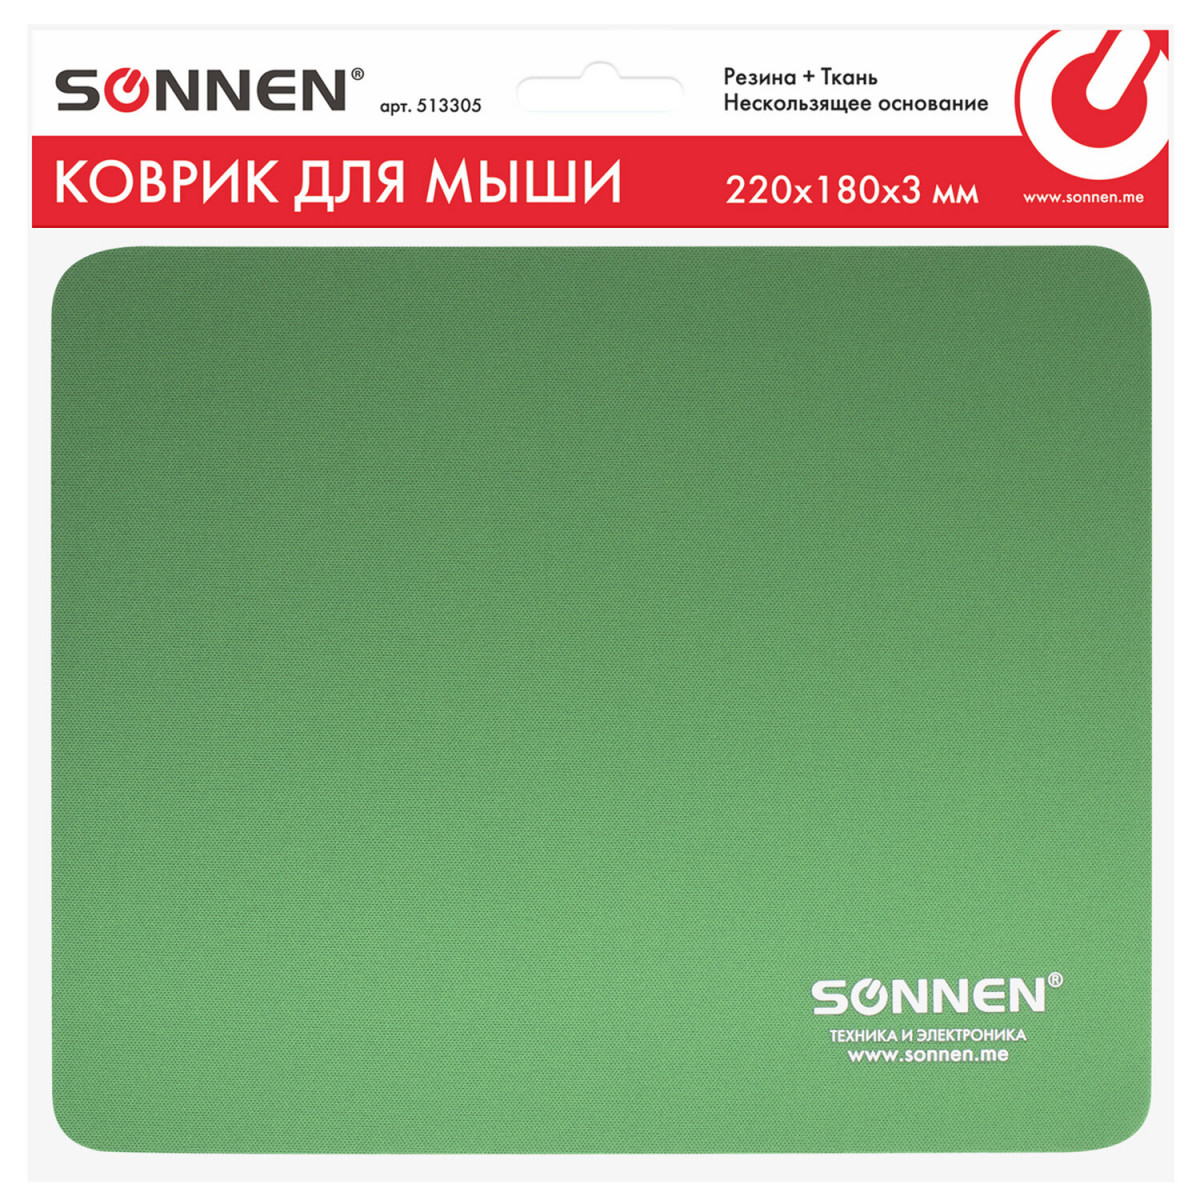 Коврик для мыши SONNEN "GREEN", резина + ткань, 220х180х3 мм, 513305 (арт. 513305)